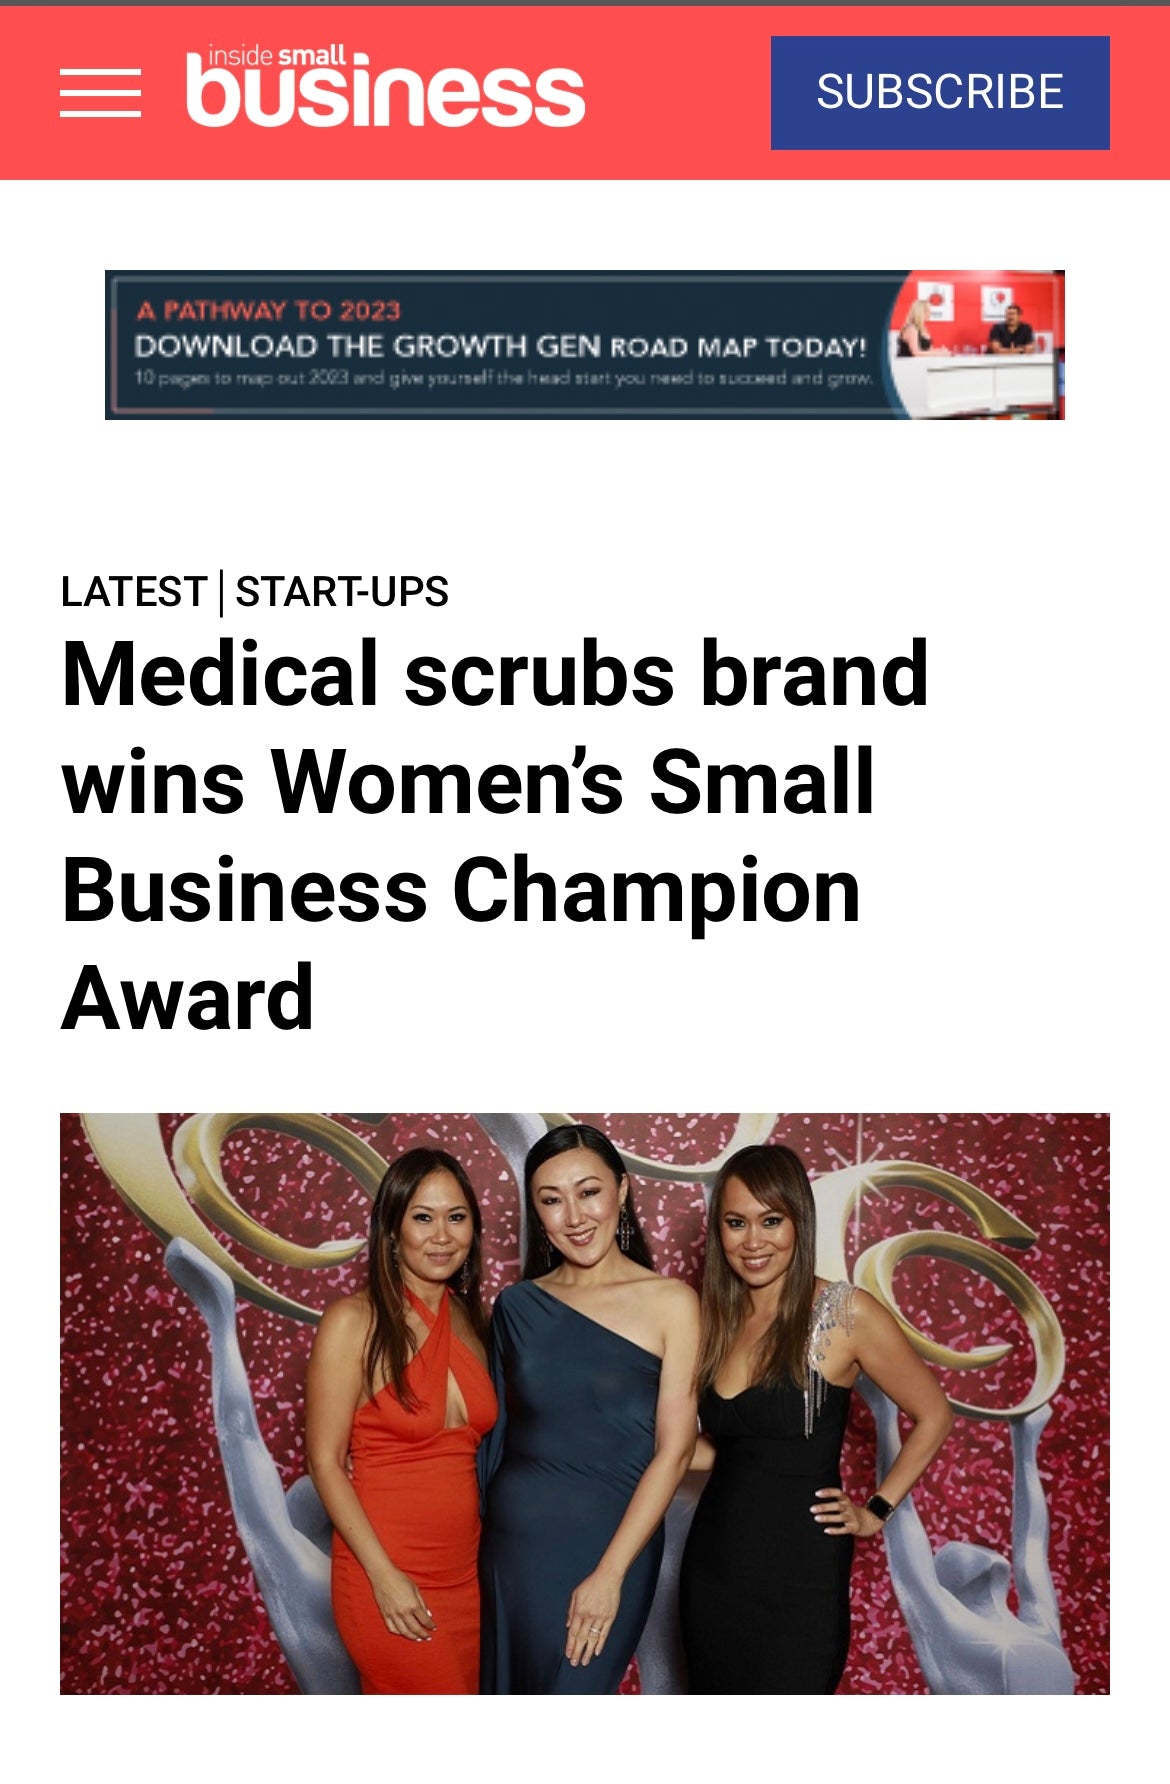 Medical scrubs brand wins Women's Small Business Champion Award